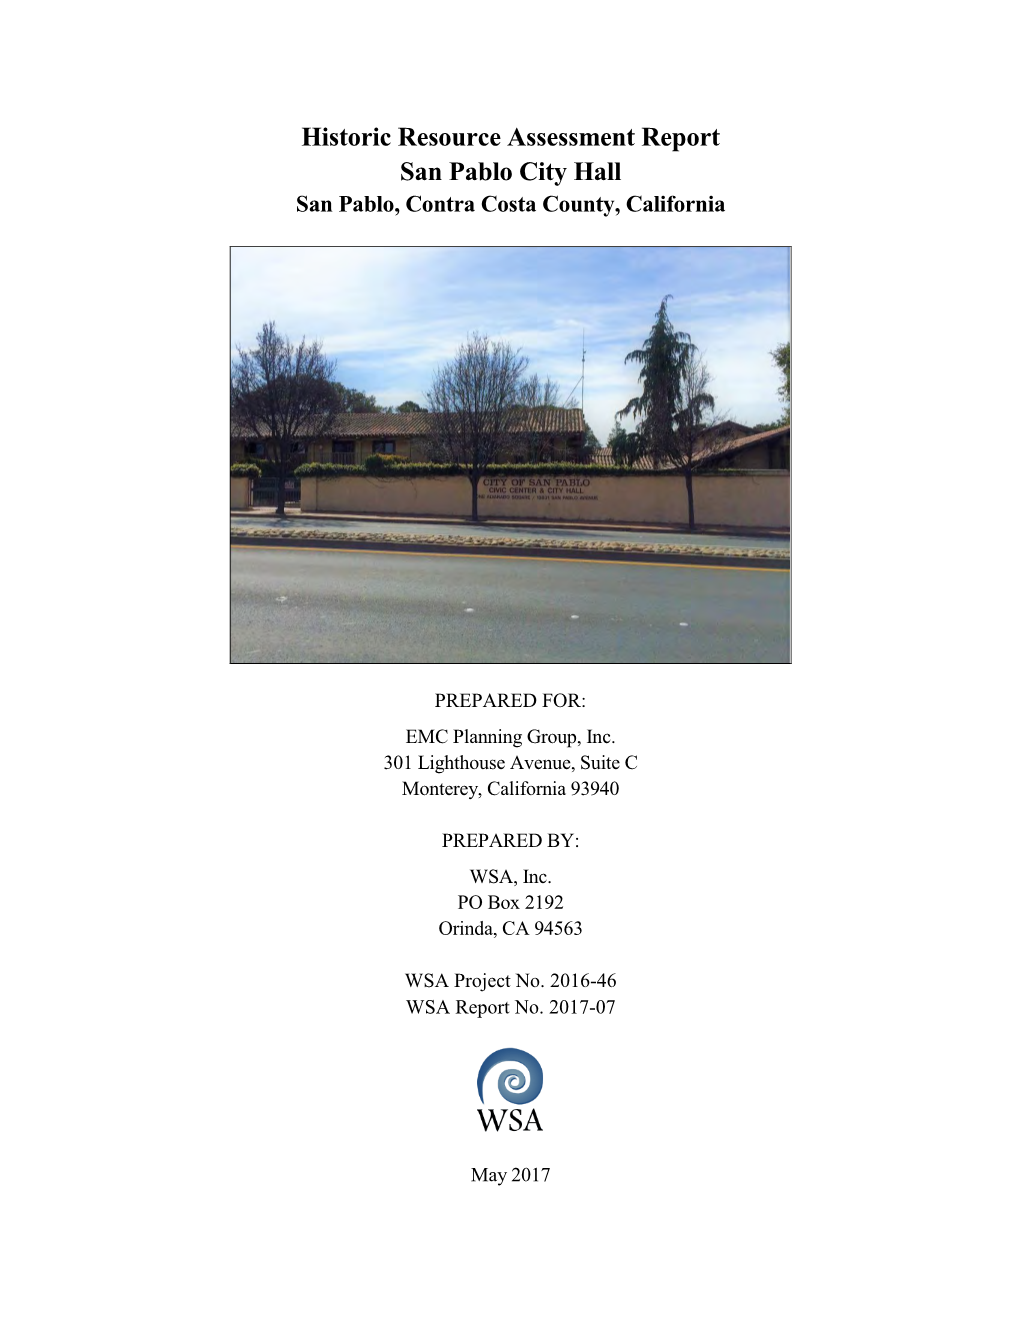 Historic Resource Assessment Report San Pablo City Hall San Pablo, Contra Costa County, California